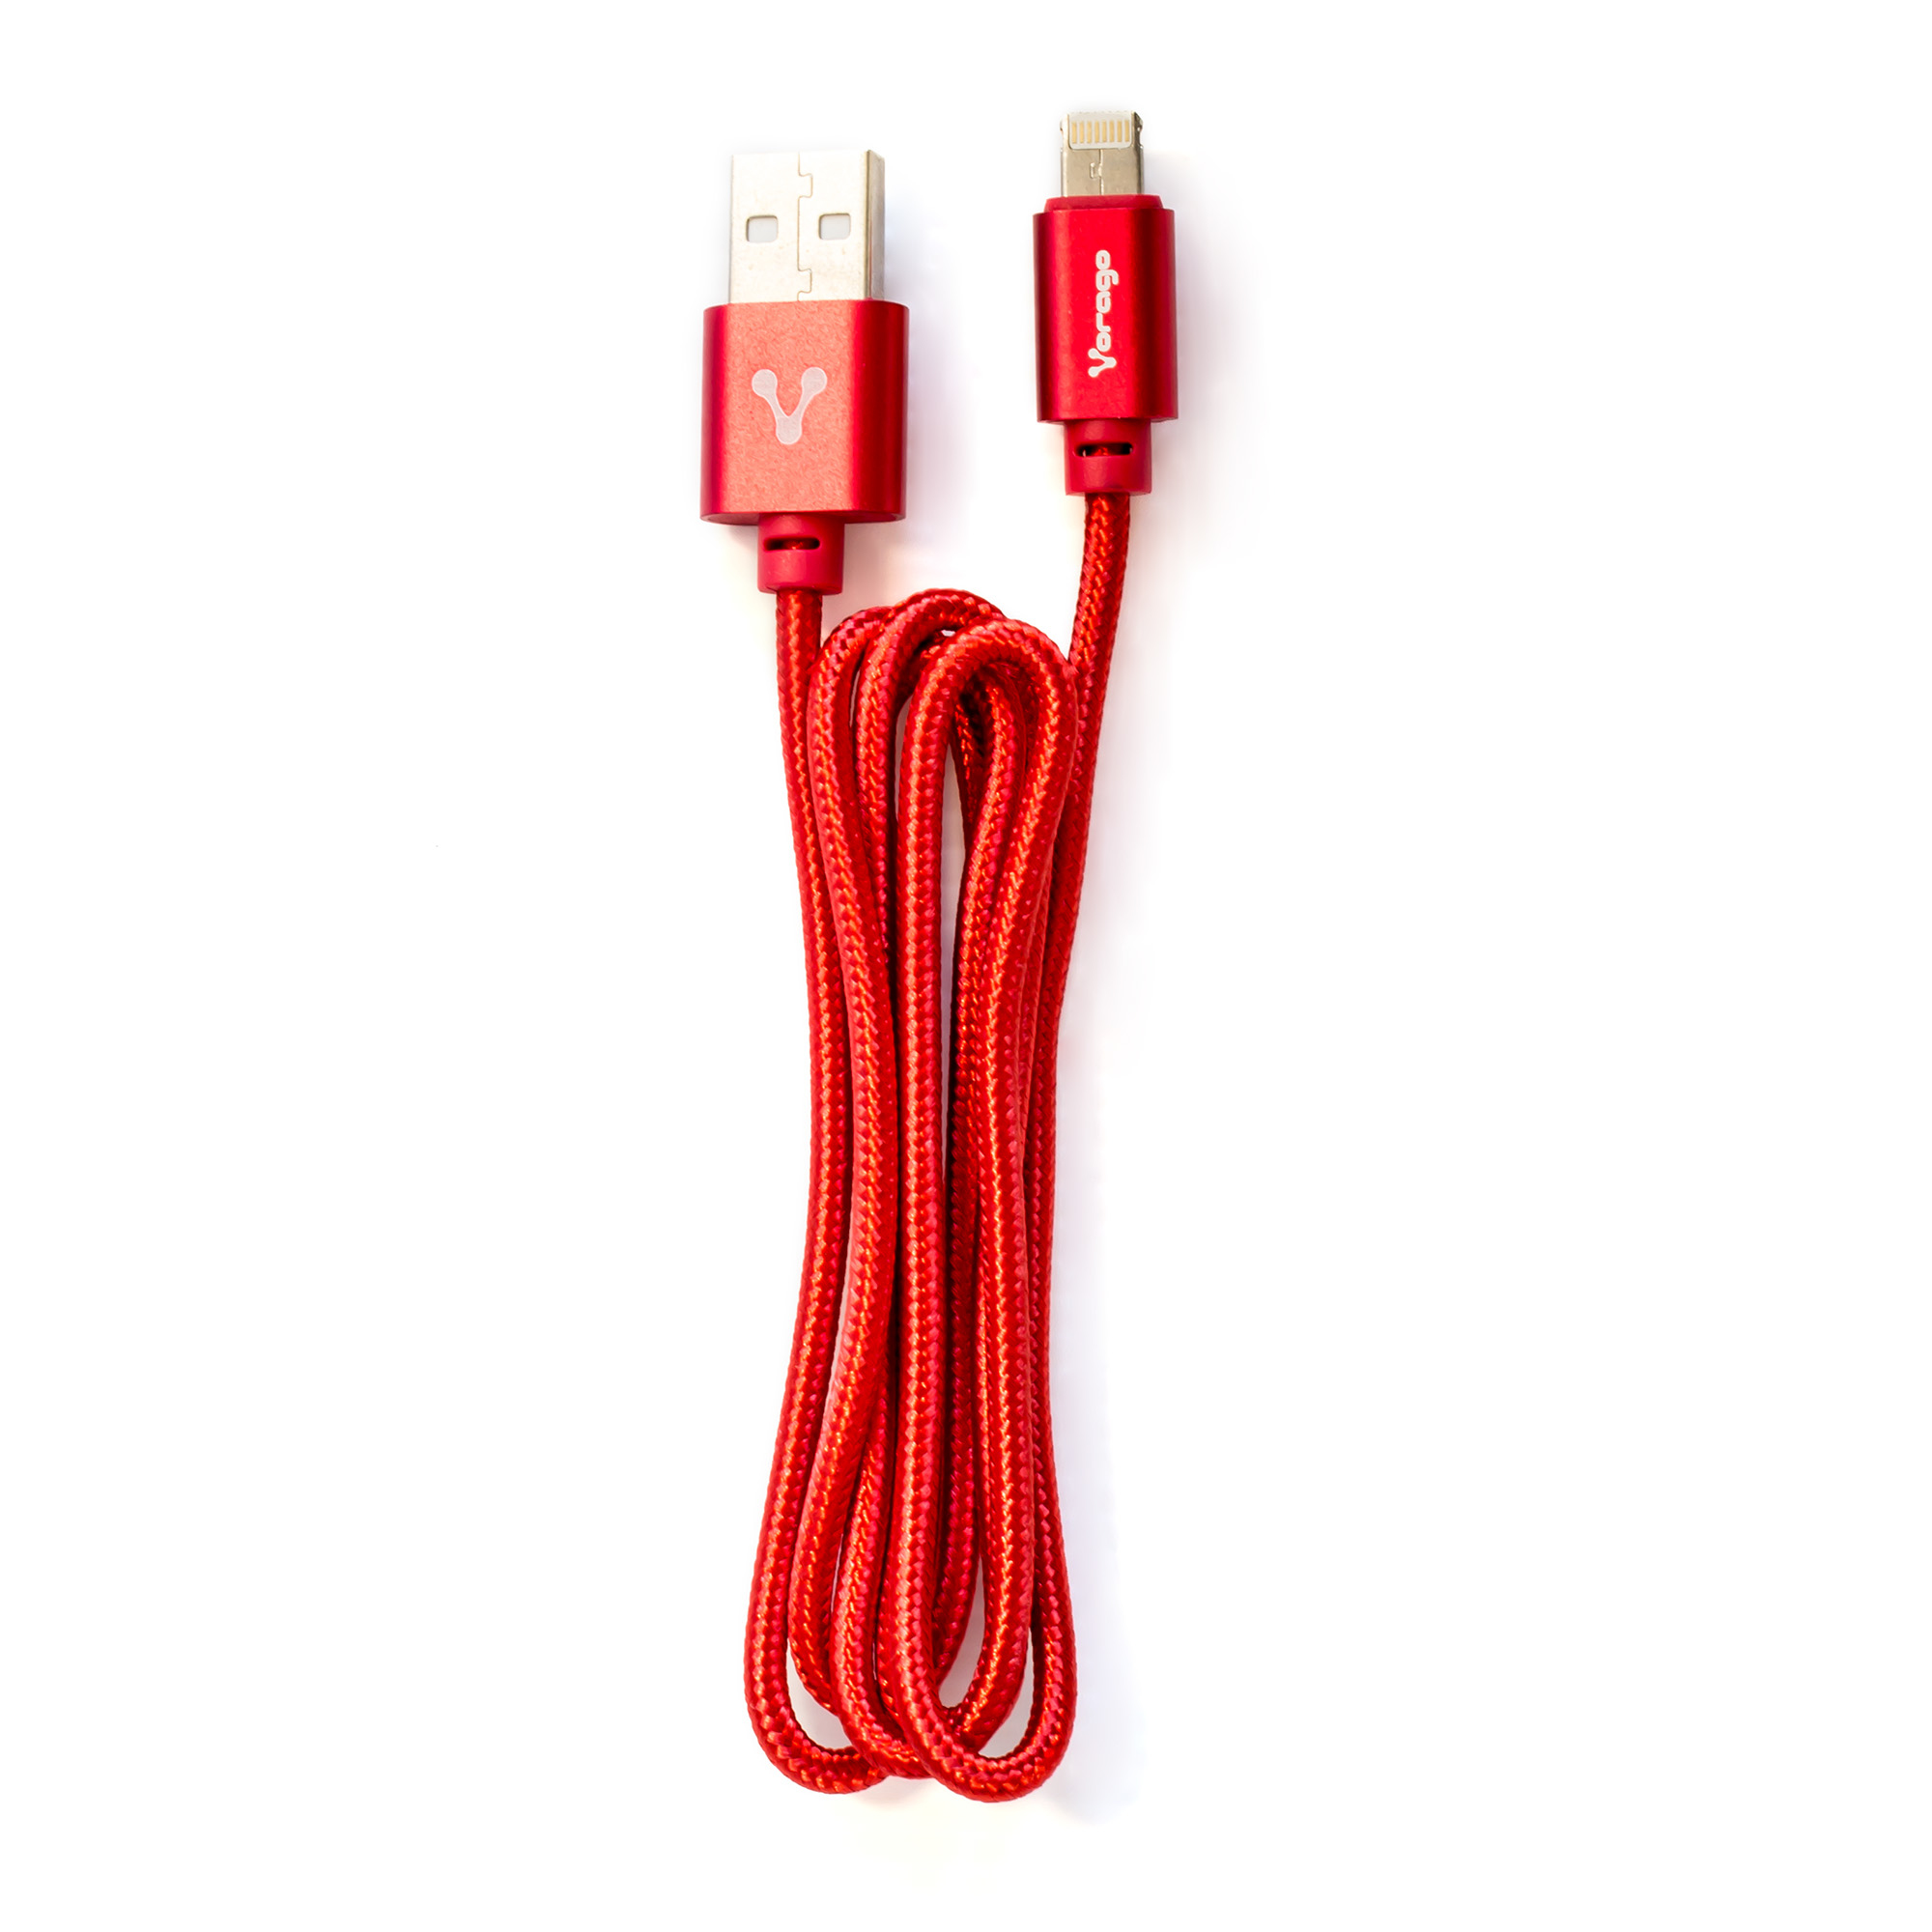 Cable Vorago Cab-209 Dual Micro Usb/Lightning Rojo 1M Bolsa